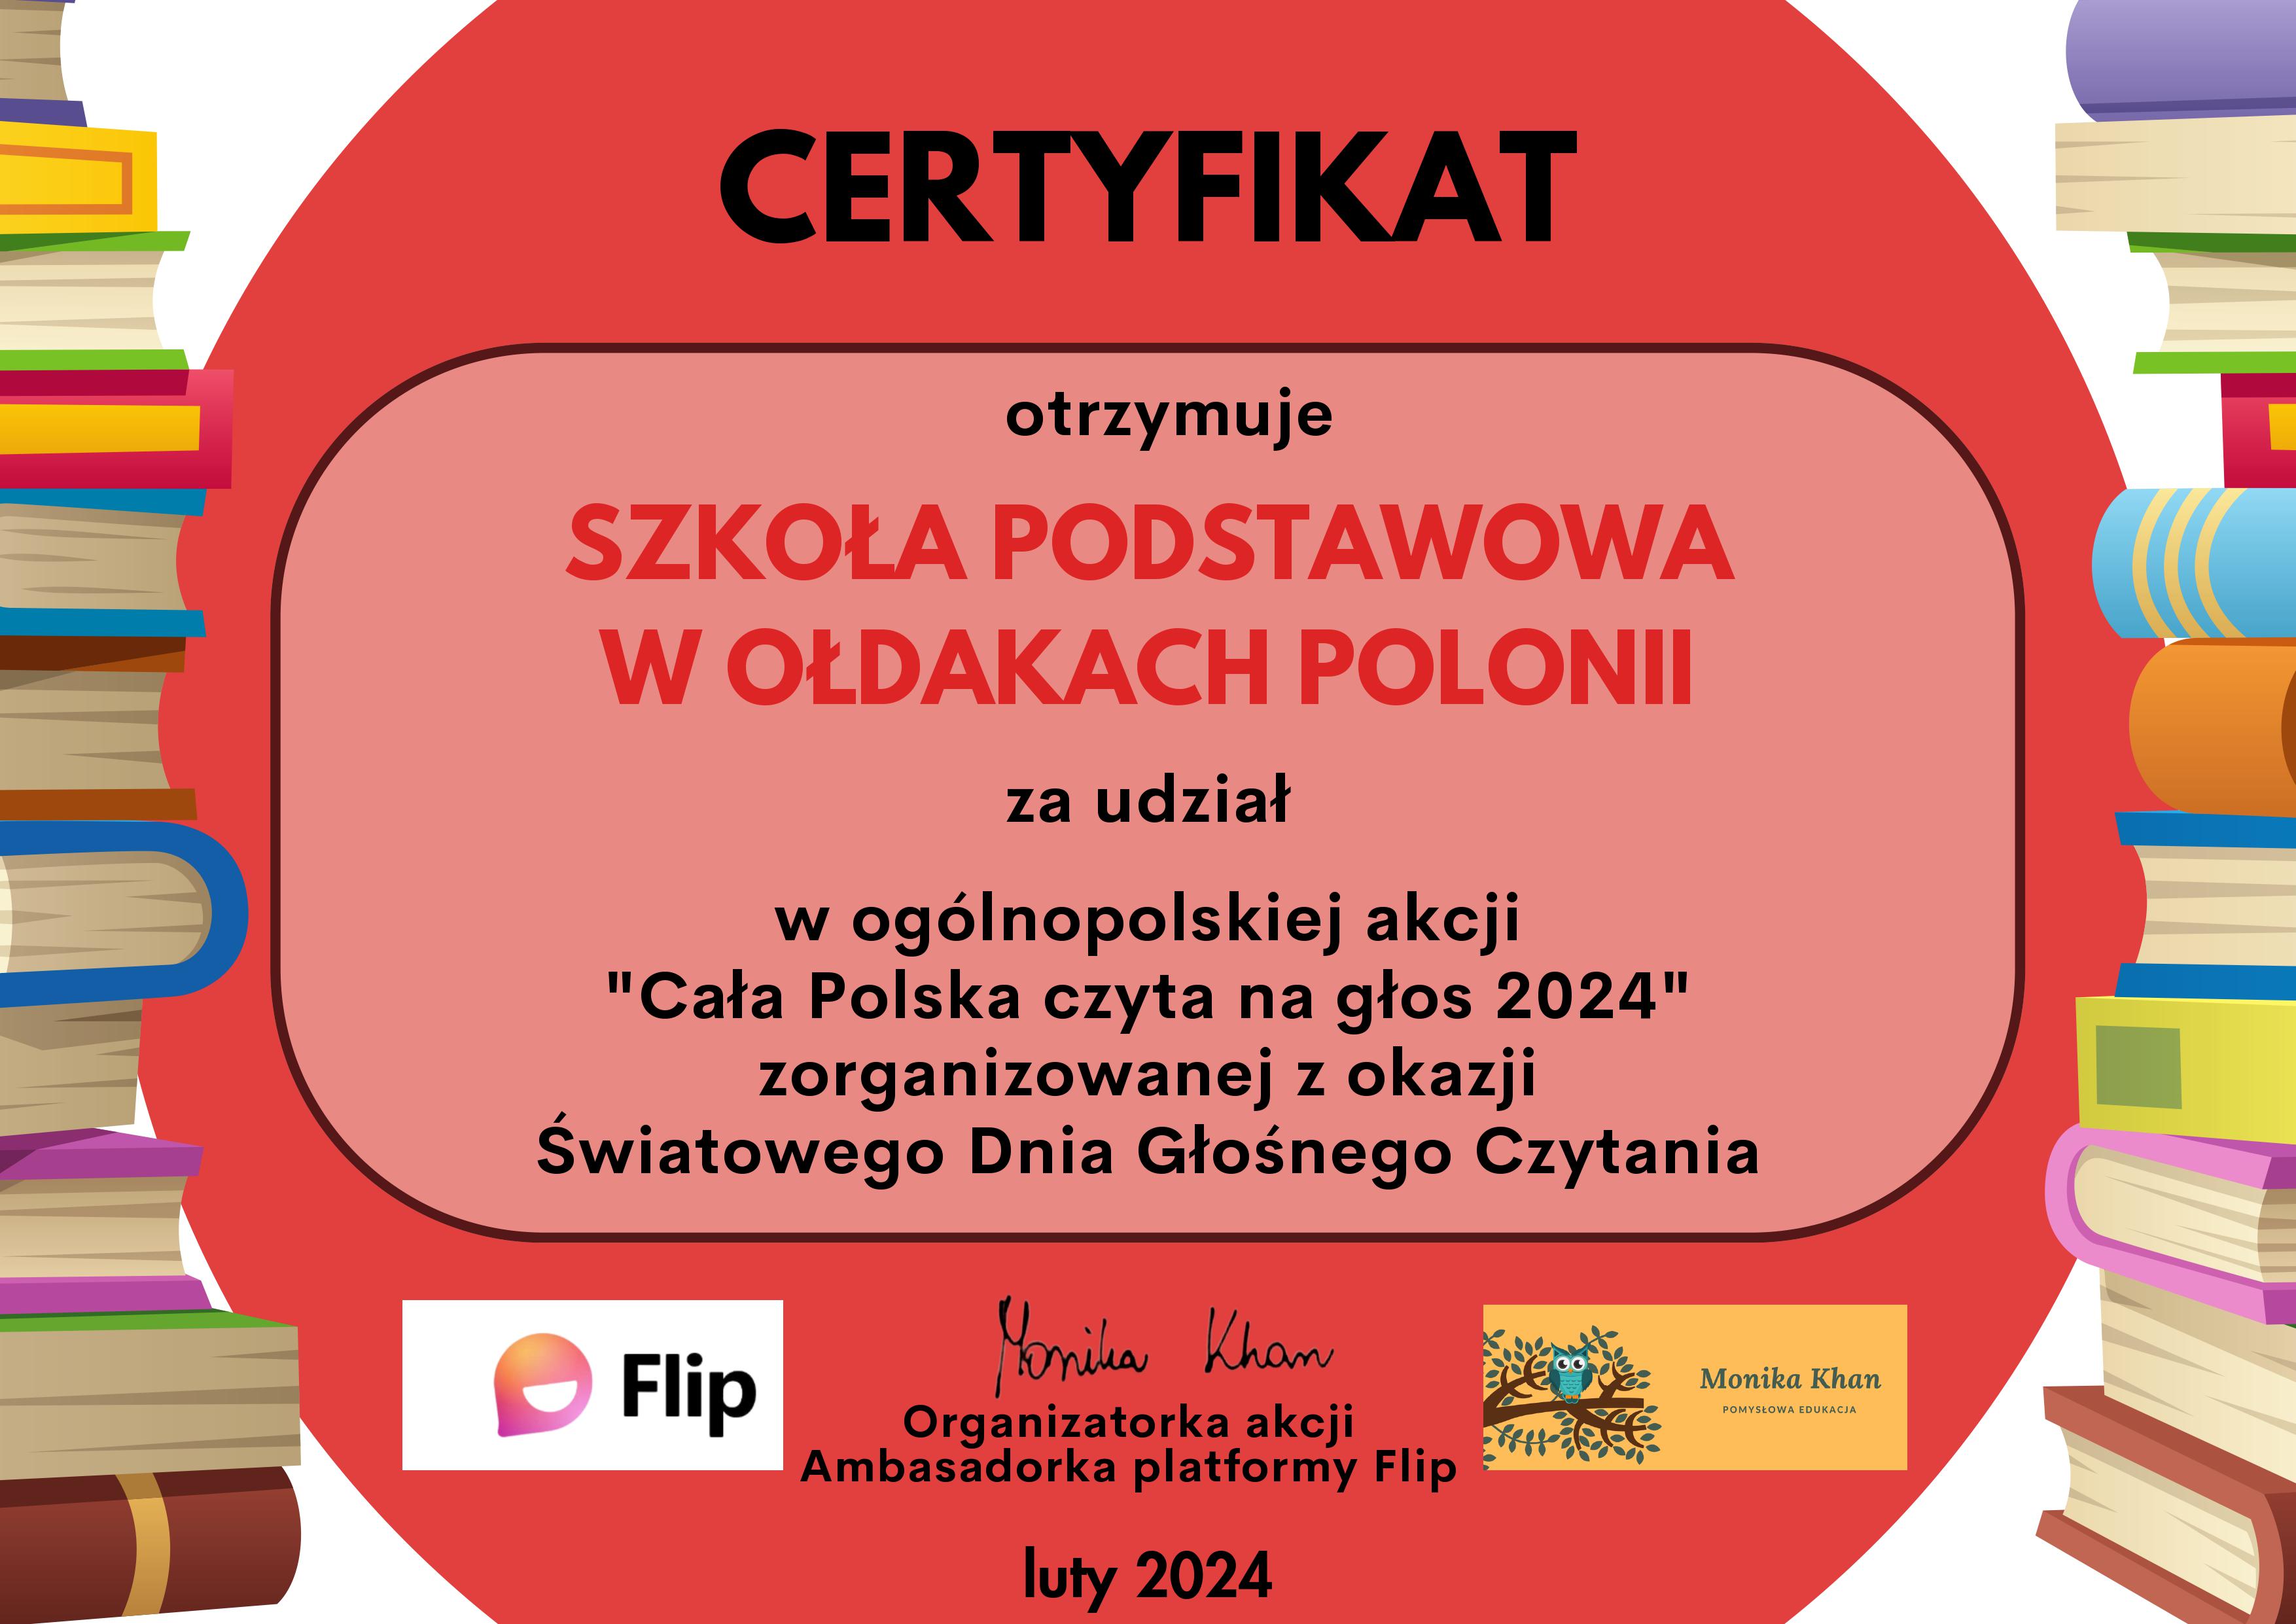 SP Odaki Polonia 3.jpg - 473.57 kb